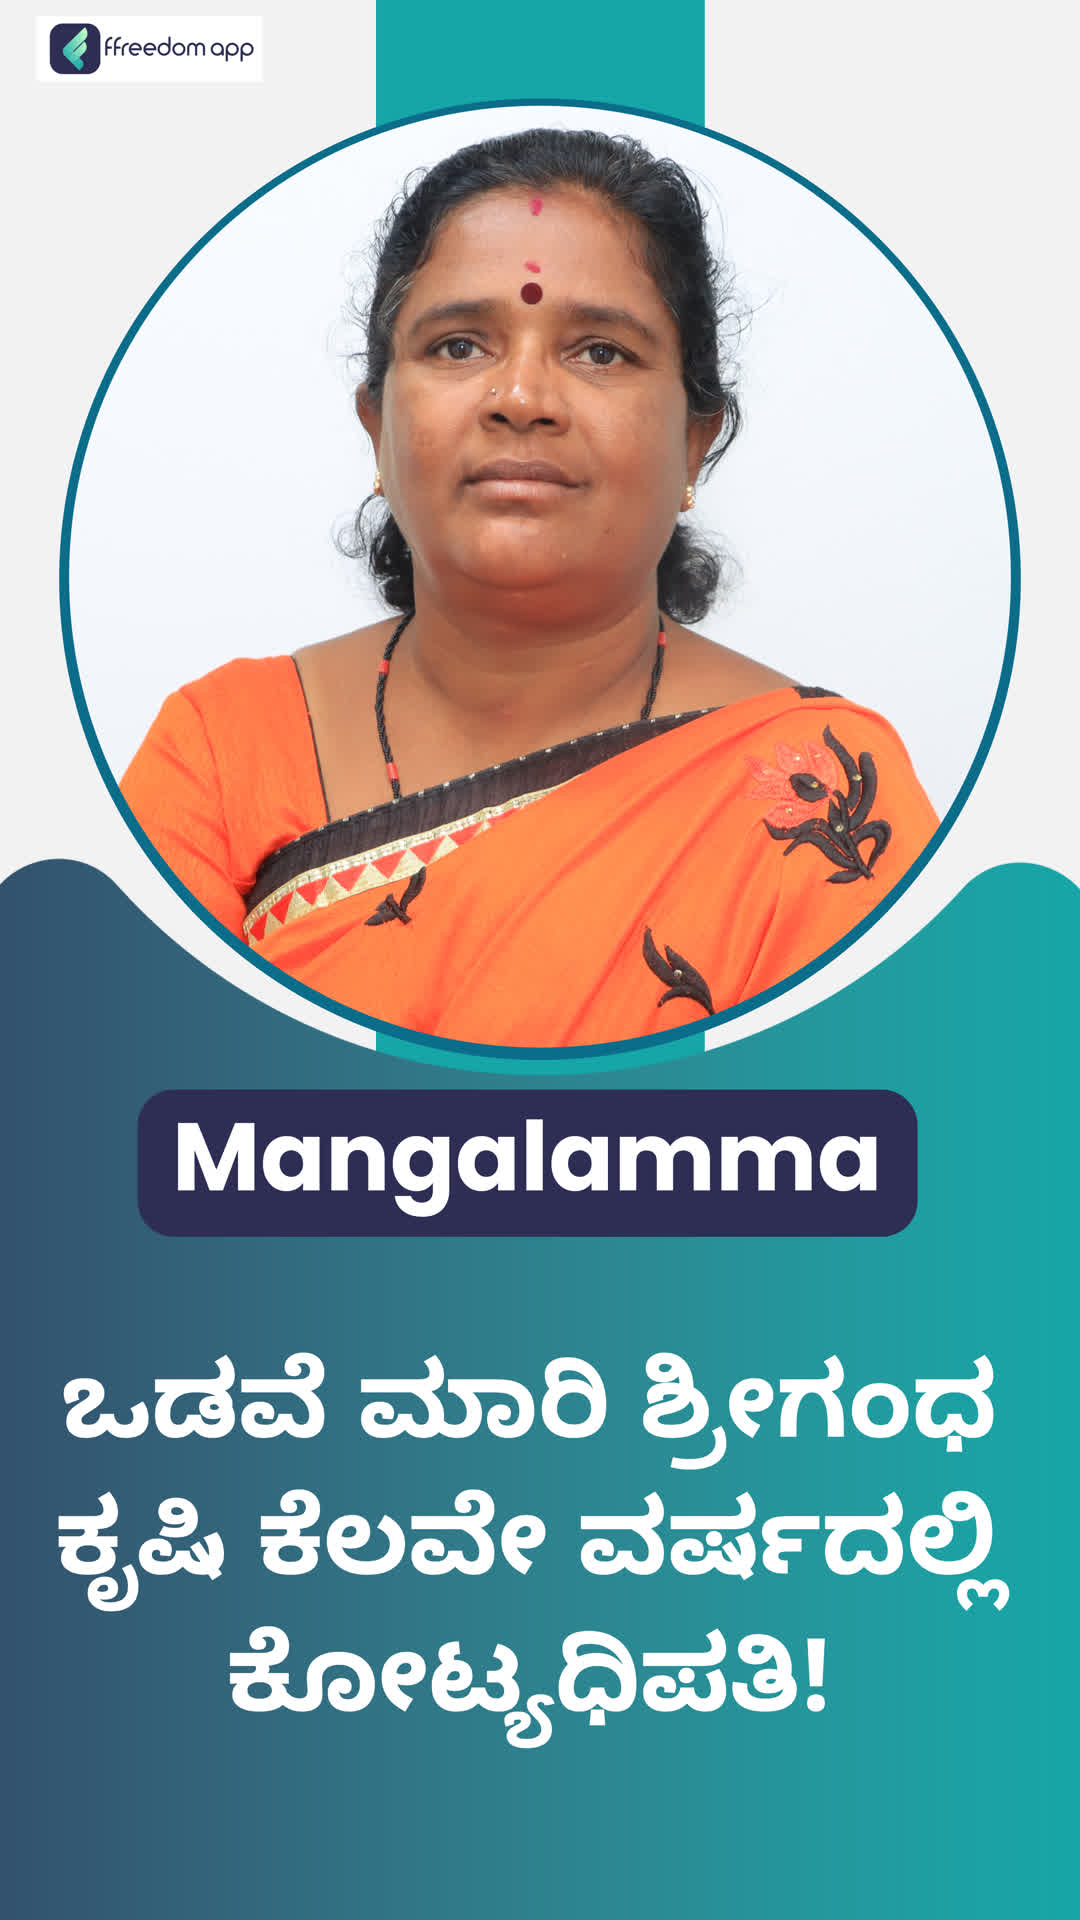 Mangalamma's Honest Review of ffreedom app - Chikballapur ,Karnataka